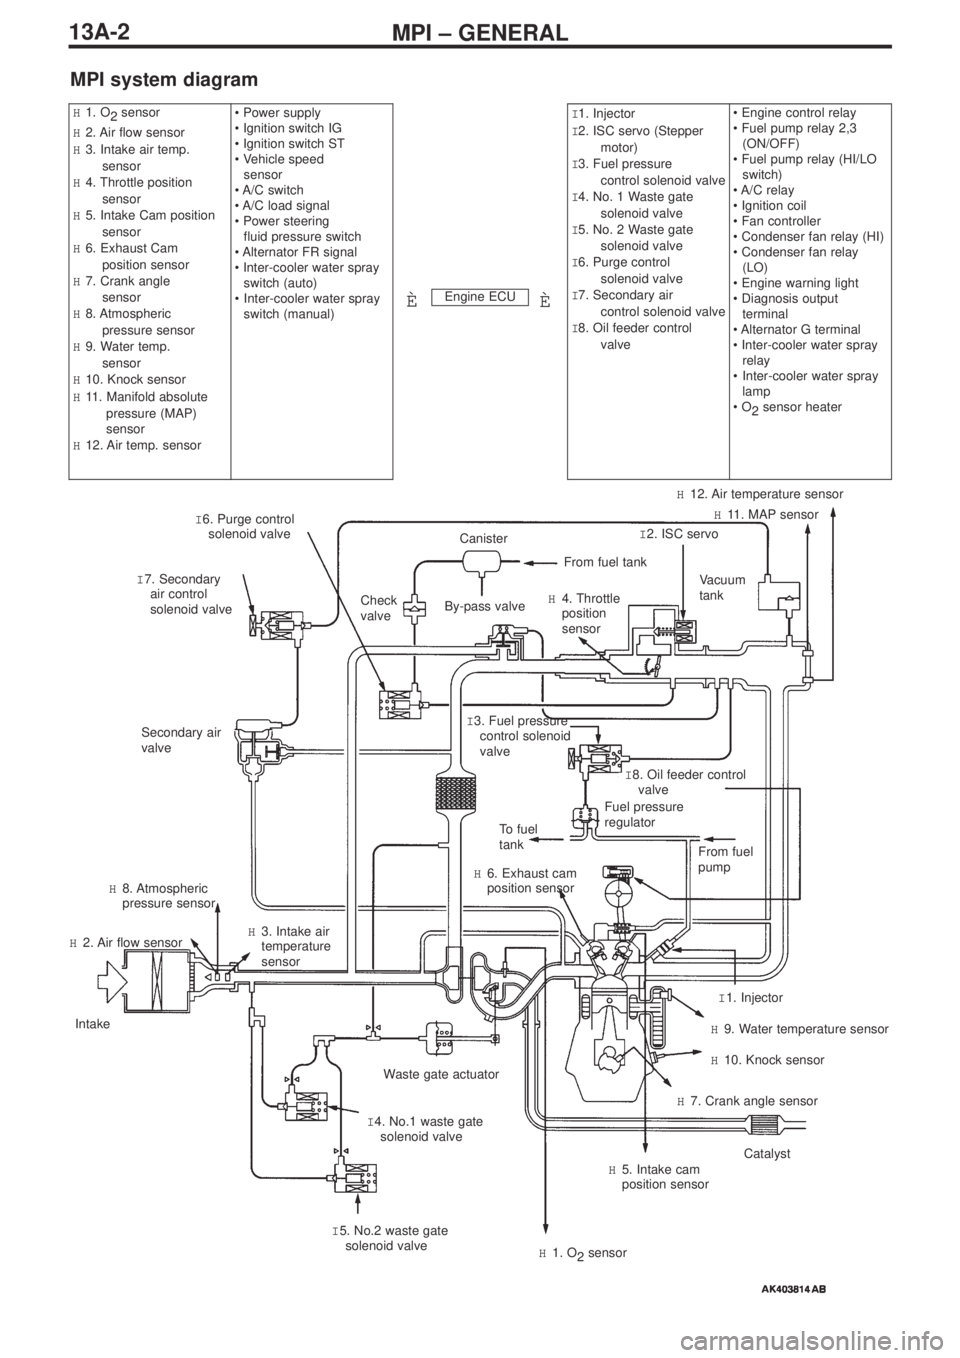 MITSUBISHI LANCER EVOLUTION IX 2005  Workshop Manual MPI – GENERAL13A-2
MPI system diagram
Engine ECU
H1. O
2 sensor
H2. Air flow sensor
H3. Intake air temp. 
sensor
H4. Throttle position
sensor
H5. Intake Cam position
sensor
H6. Exhaust Cam    
posit